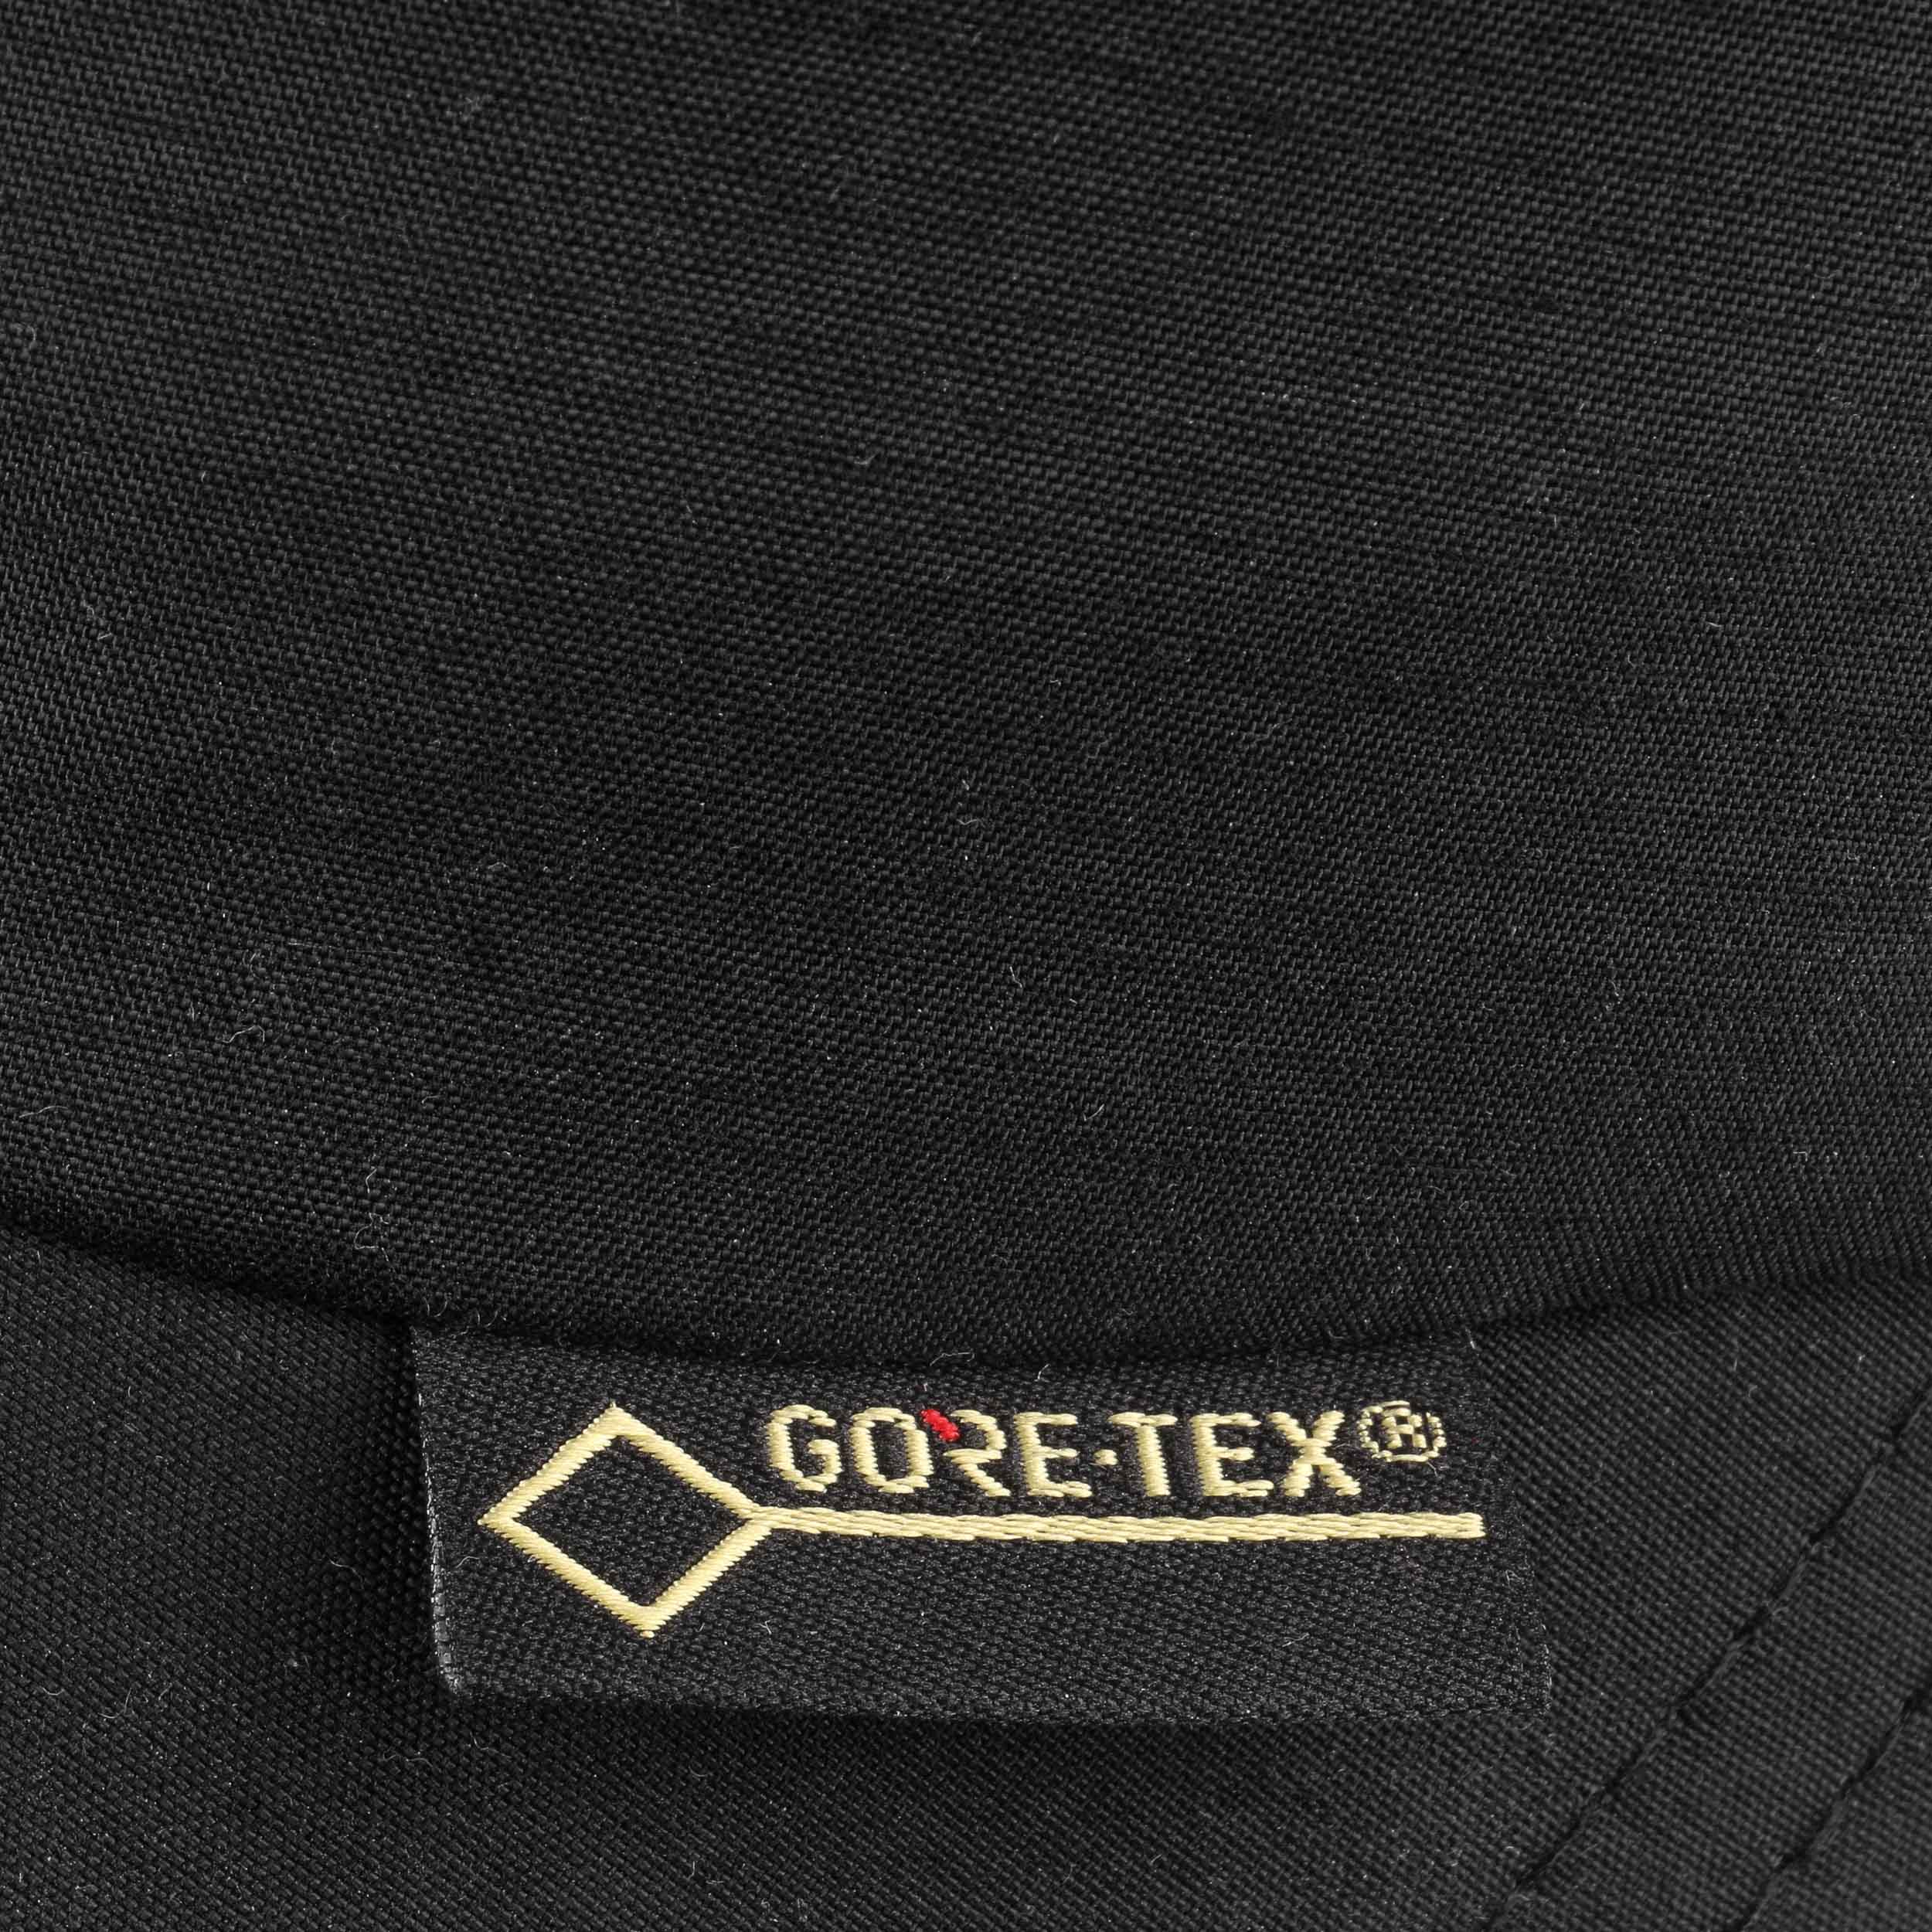 Gortex Logo - LogoDix